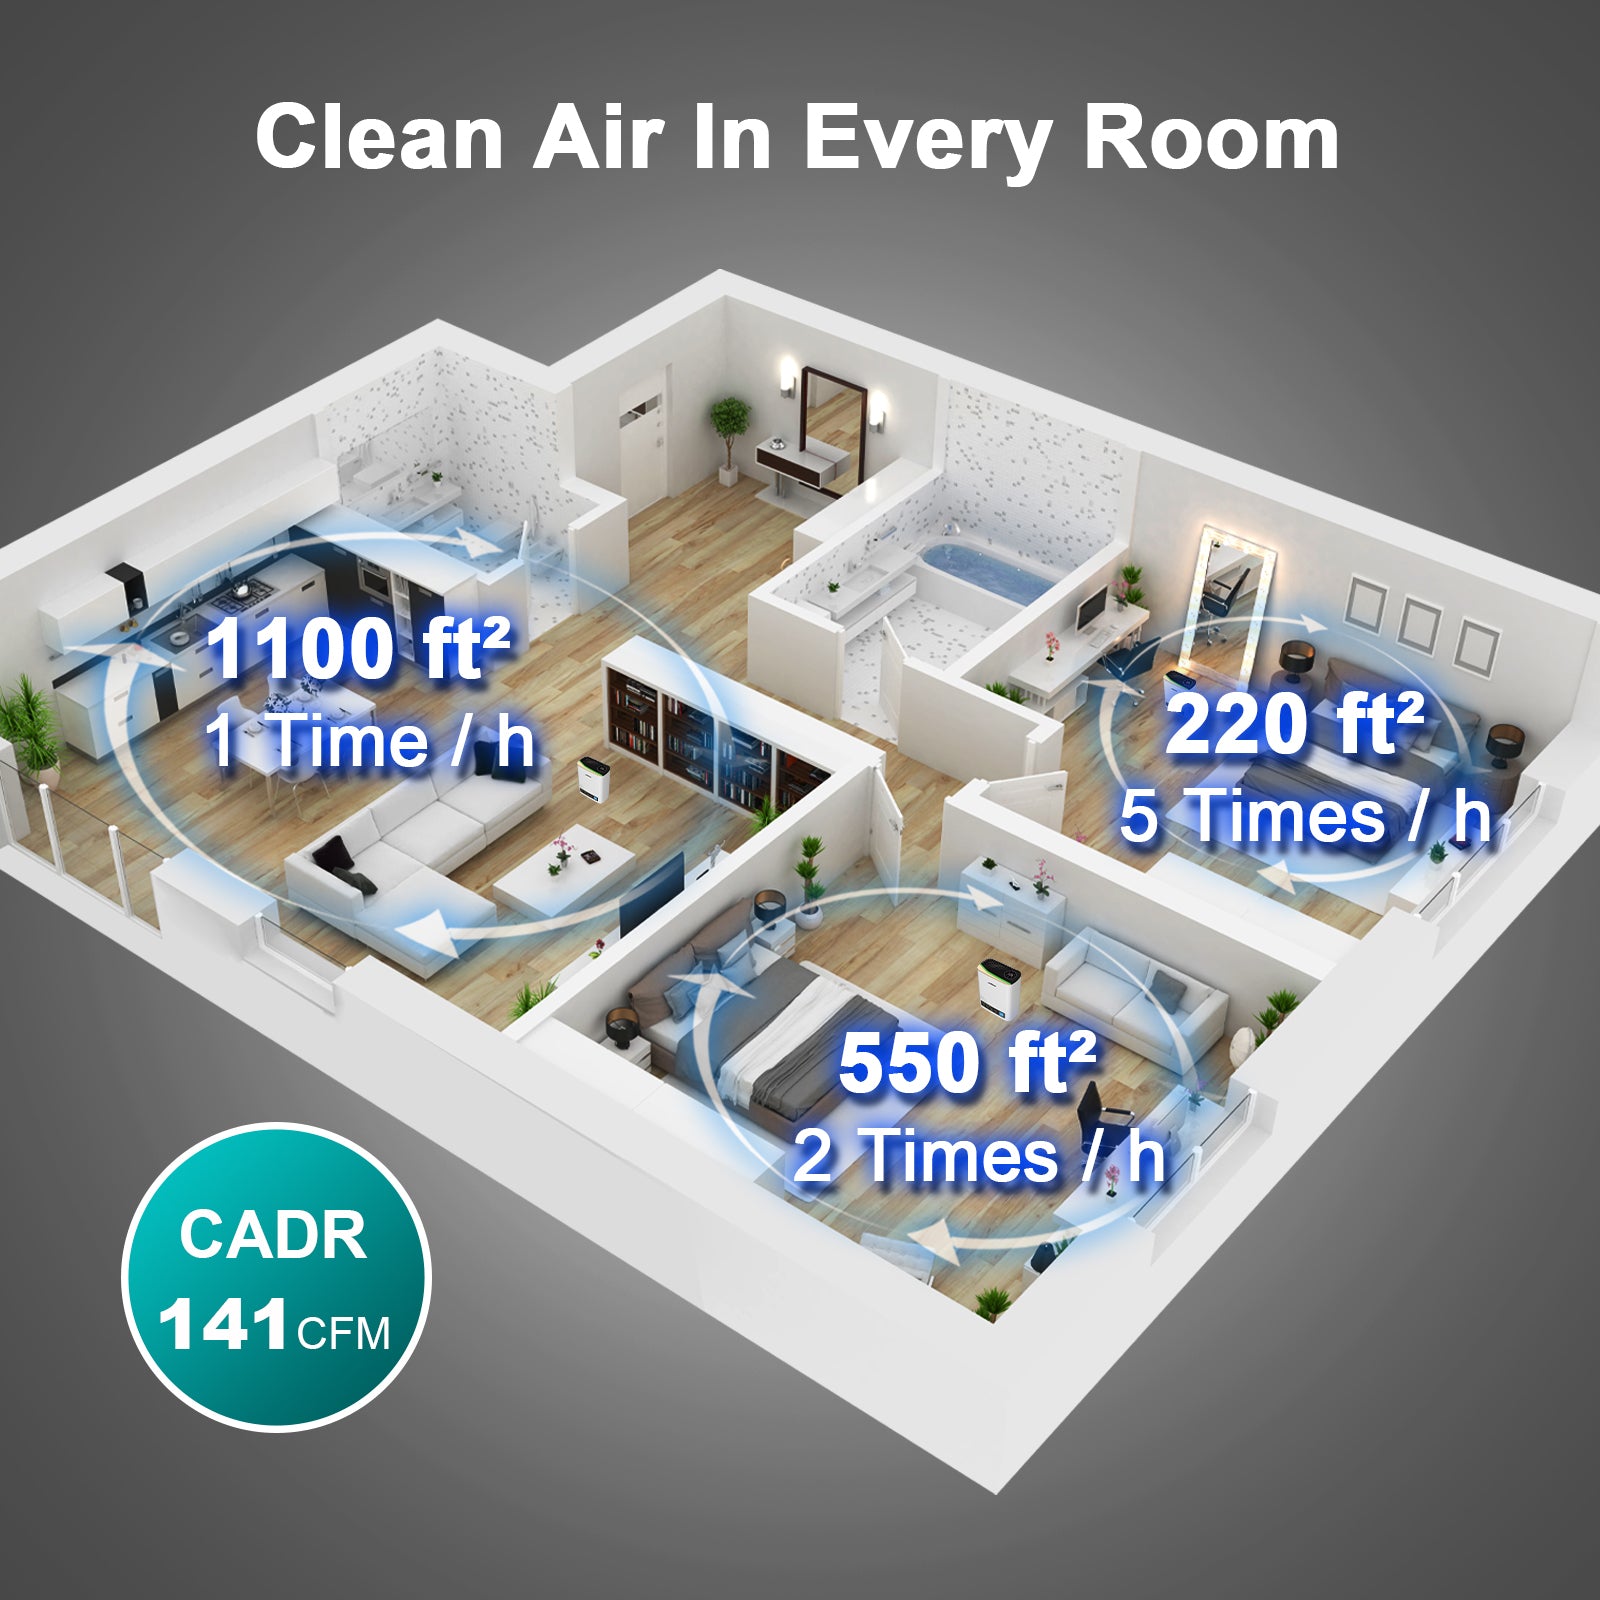 Jafanda Air Purifiers for Home Large Room Up To 1100ft², True HEPA 13 Filter, Activated Carbon Remove 99.97% Dust Smoke Odor Pollen Pets Hair Dander Allergies, Quiet Sleep Mode 20dB - Jafanda